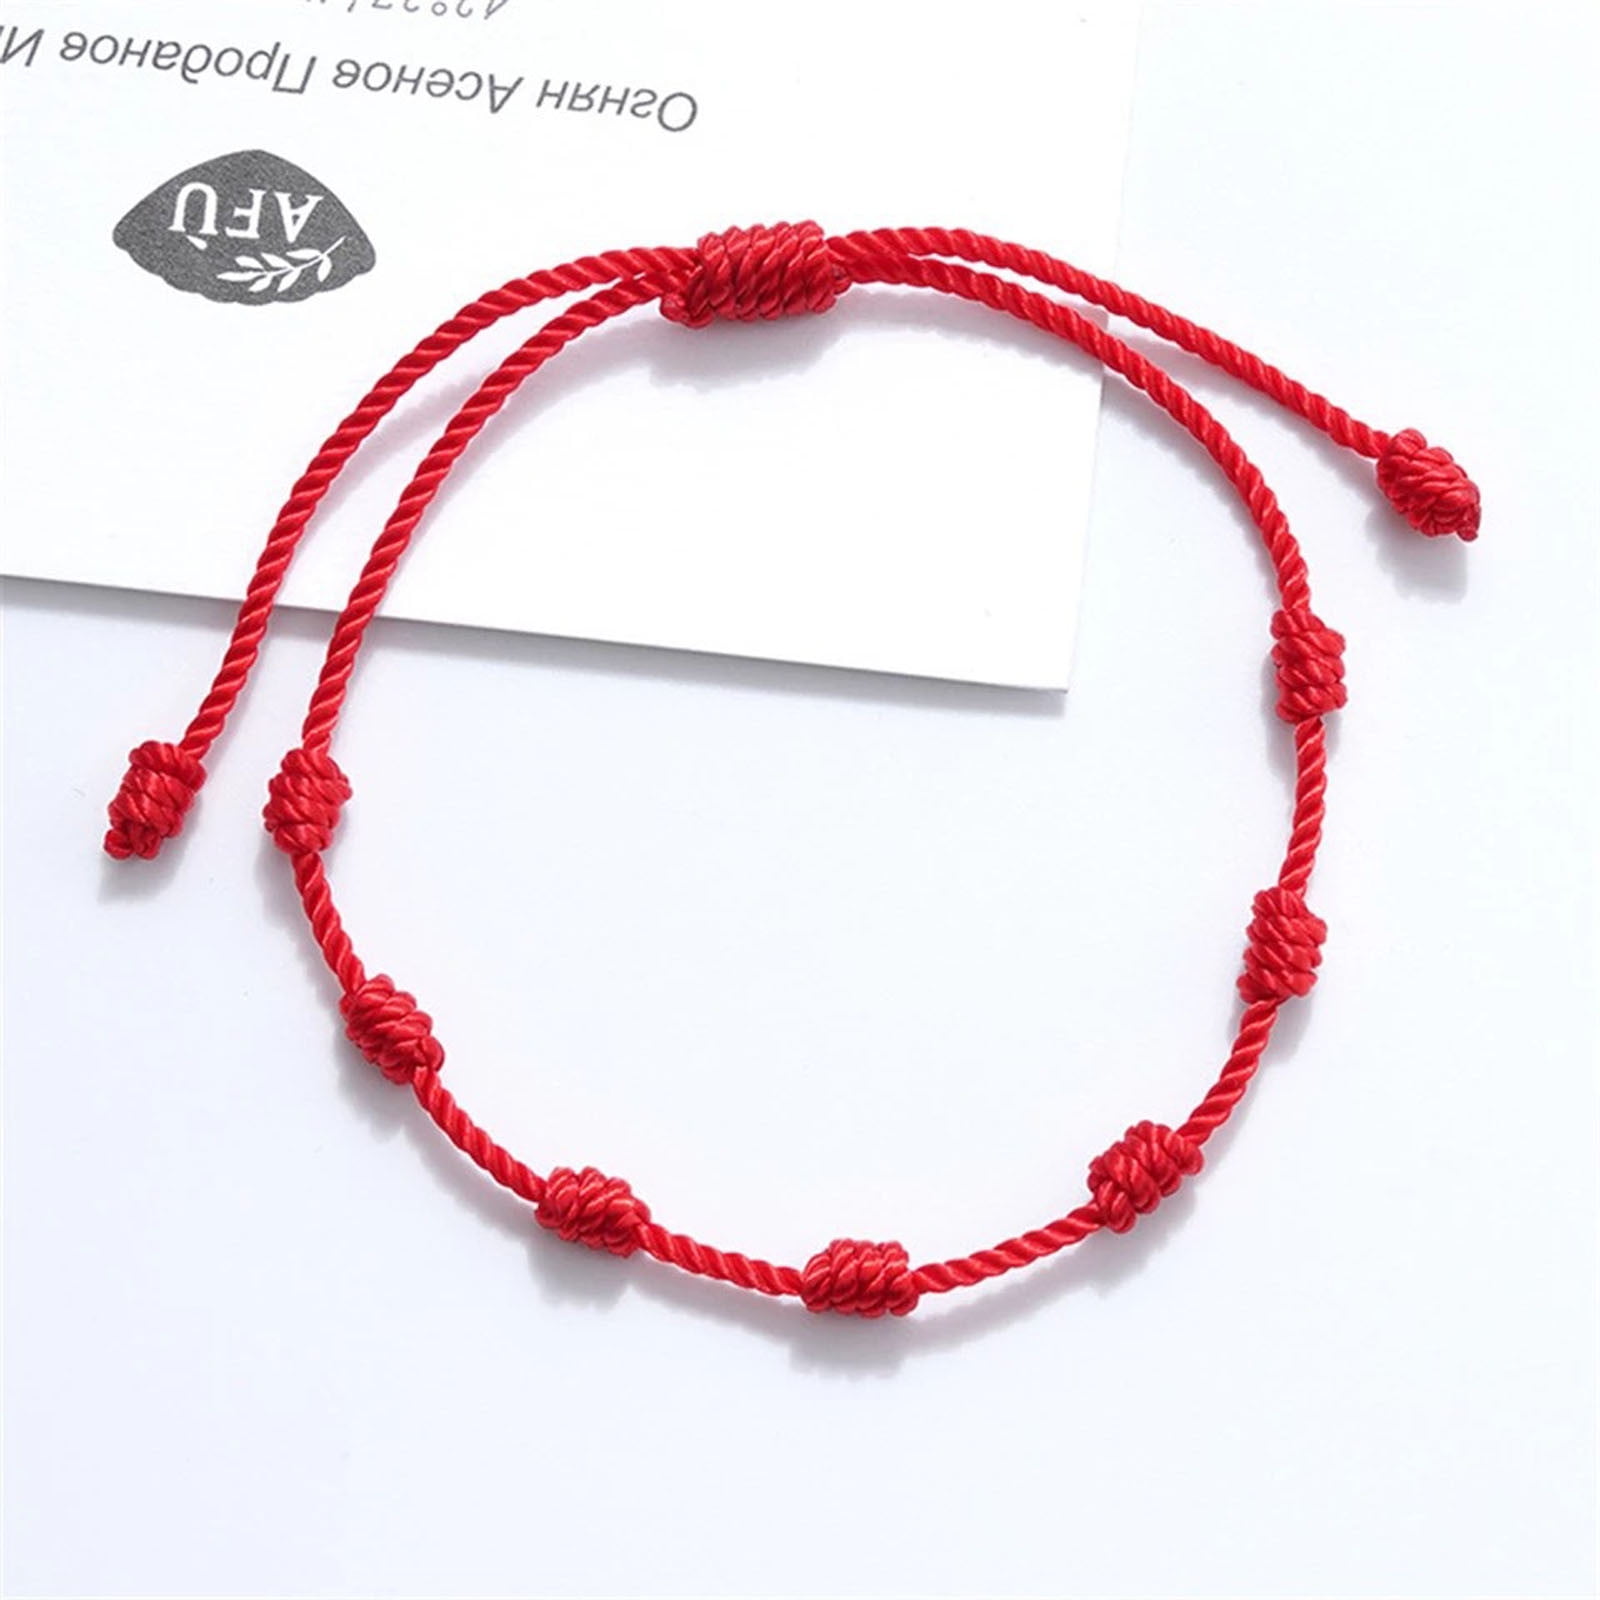 LASHALL GIFT Red String Bracelets 7 Knots String Bracelet Good